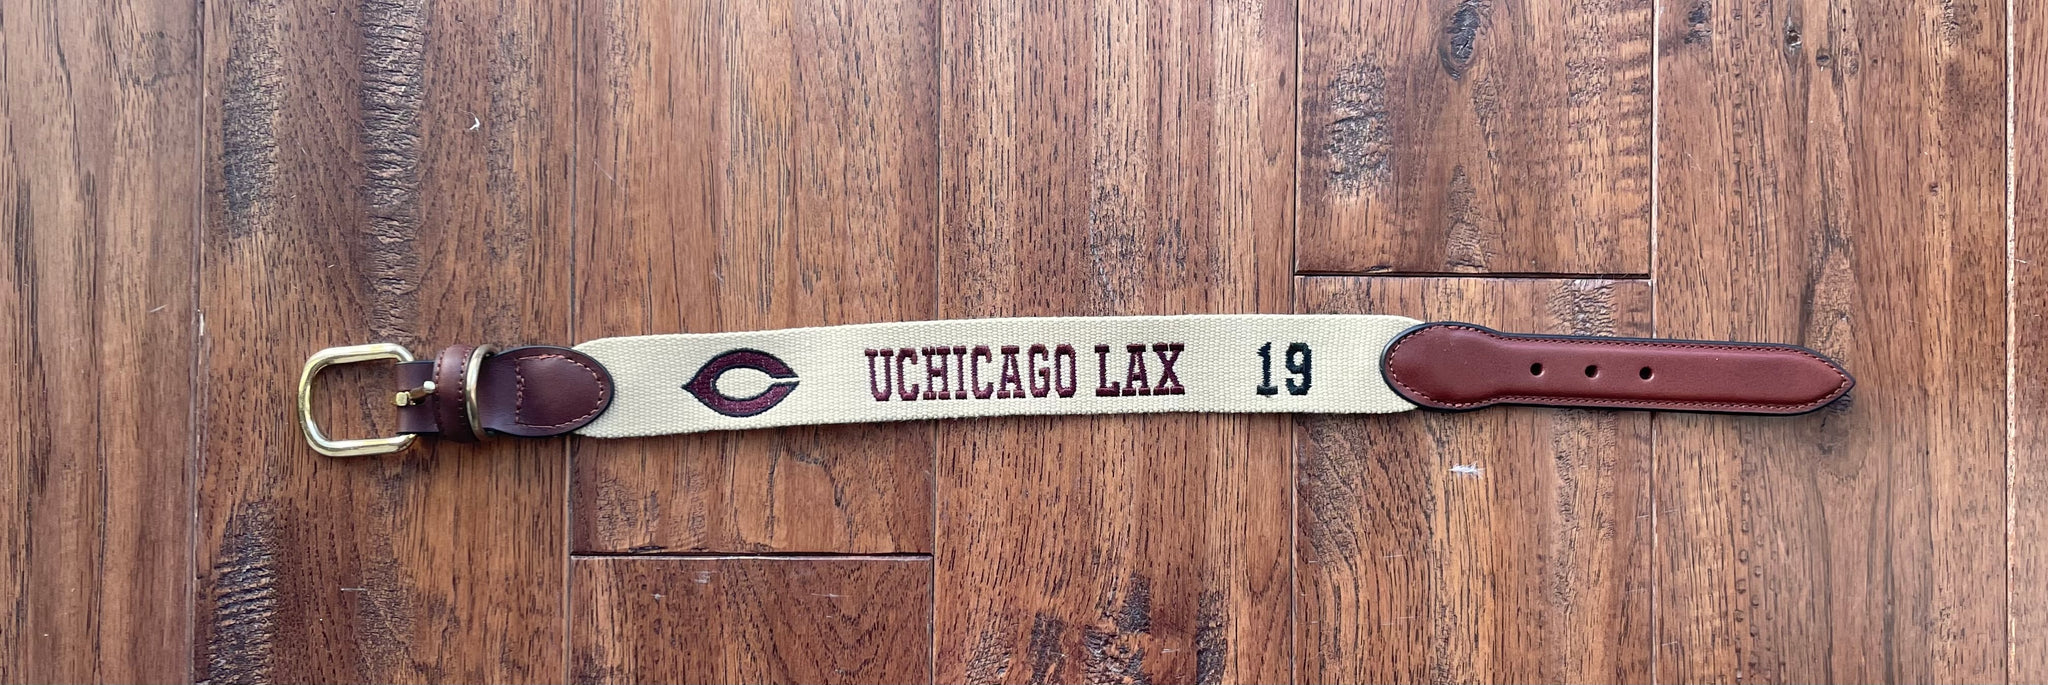 University of Chicago Dog Collar